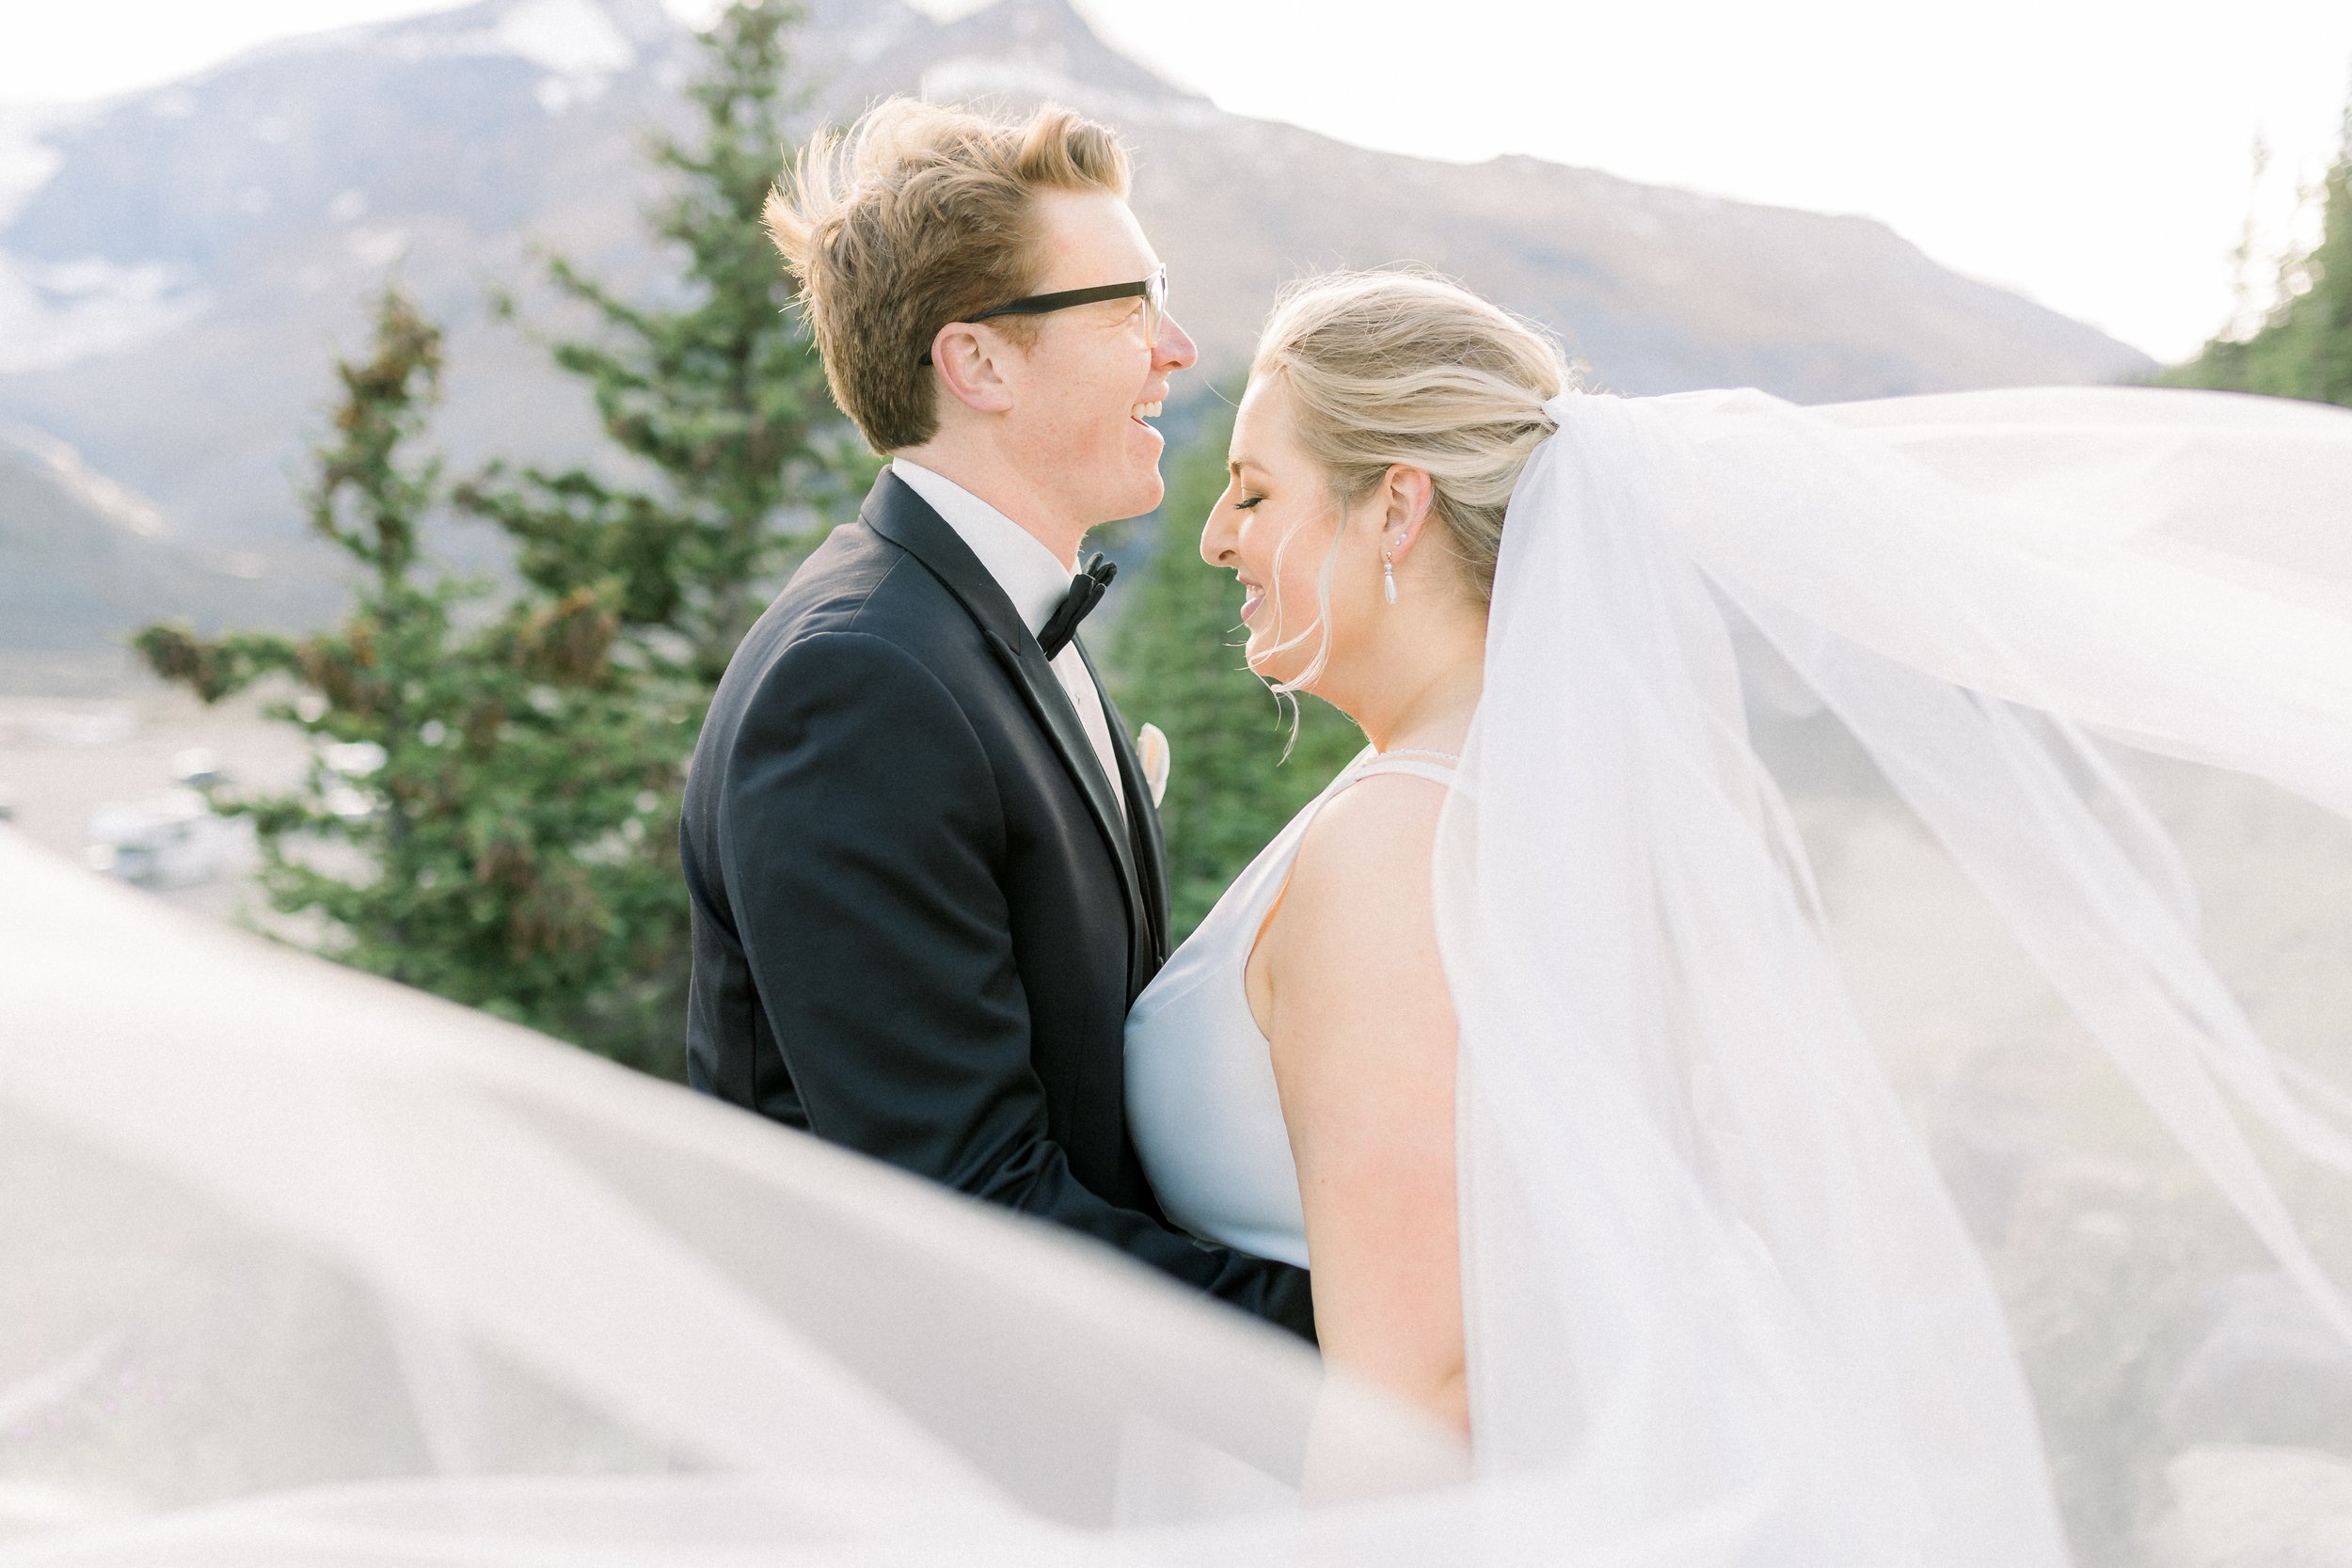 Miranda + Ryley // A Stunning Mountain Wedding at Glacier View Lodge